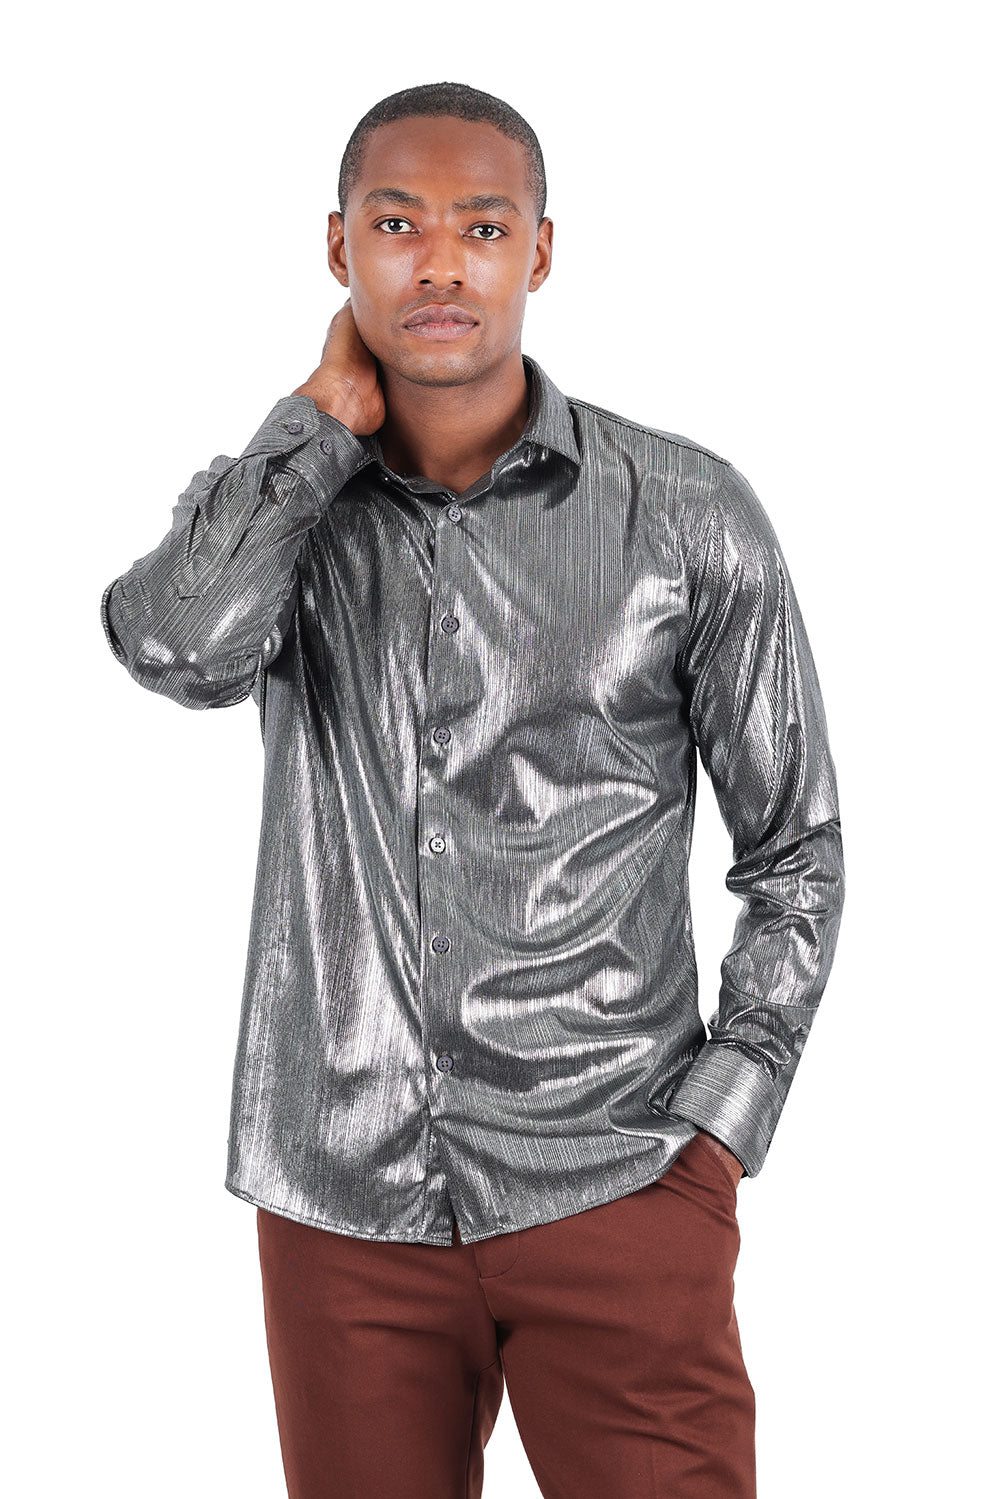 BARABAS Men's Premium Shinny Solid Color Button Down Dress Shirts B46 Silver